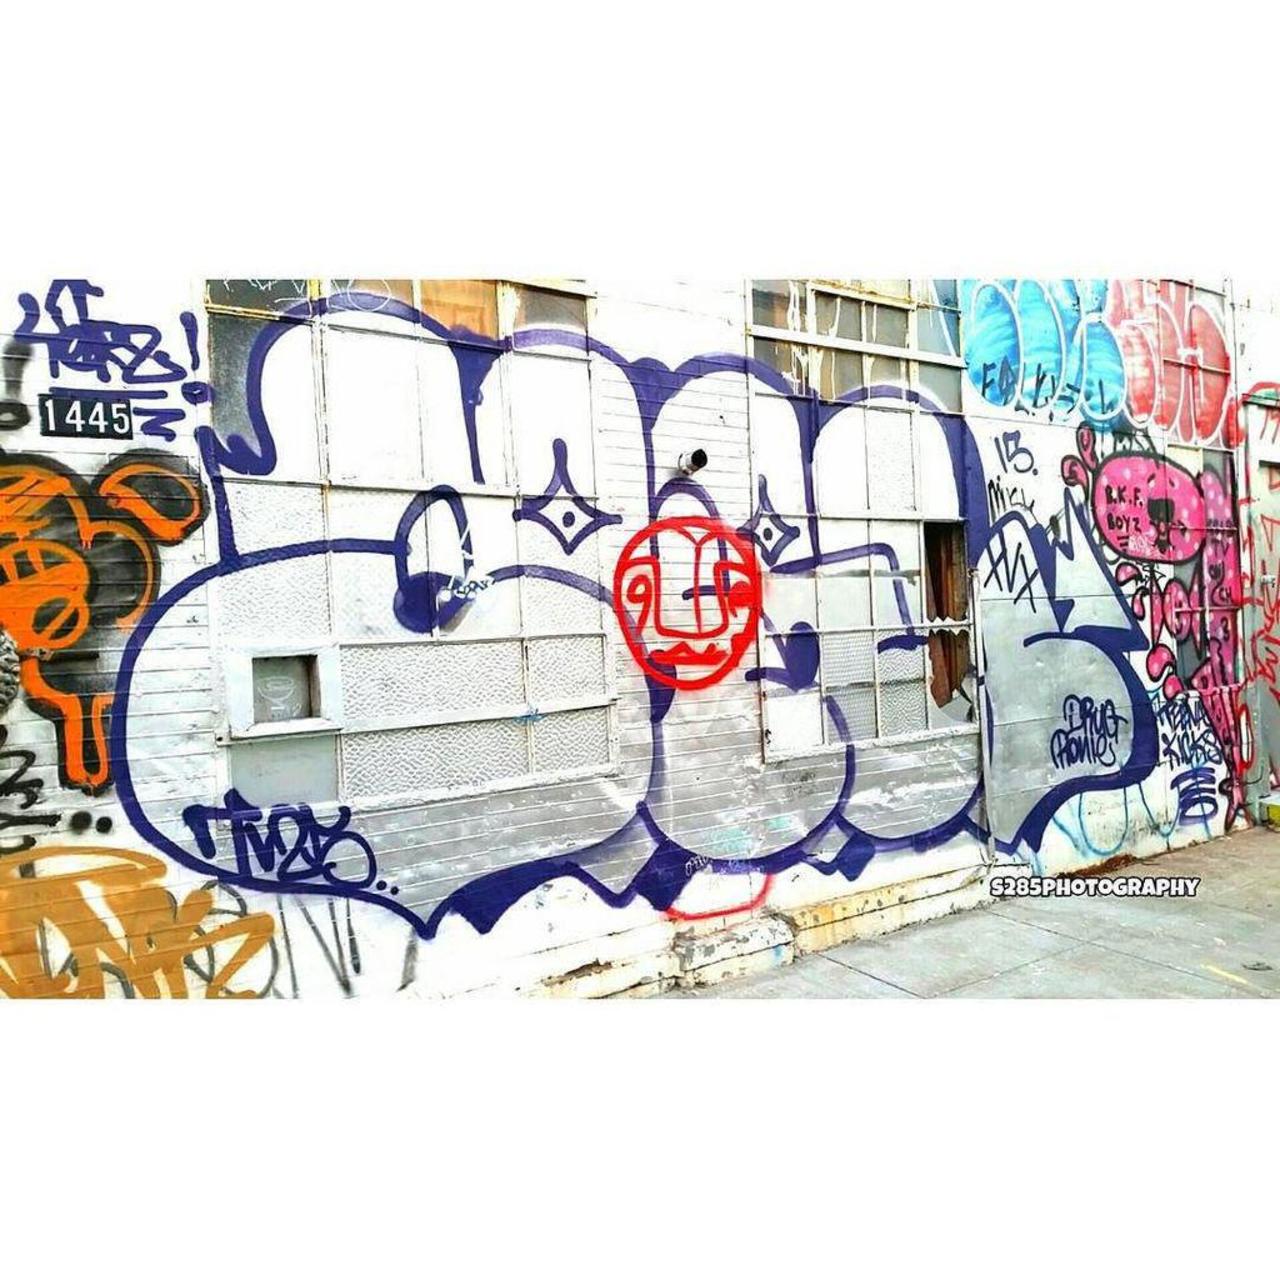 via #fresh2defart "http://ift.tt/1YKzsBb" #graffiti #streetart http://t.co/M2aIUsajBv